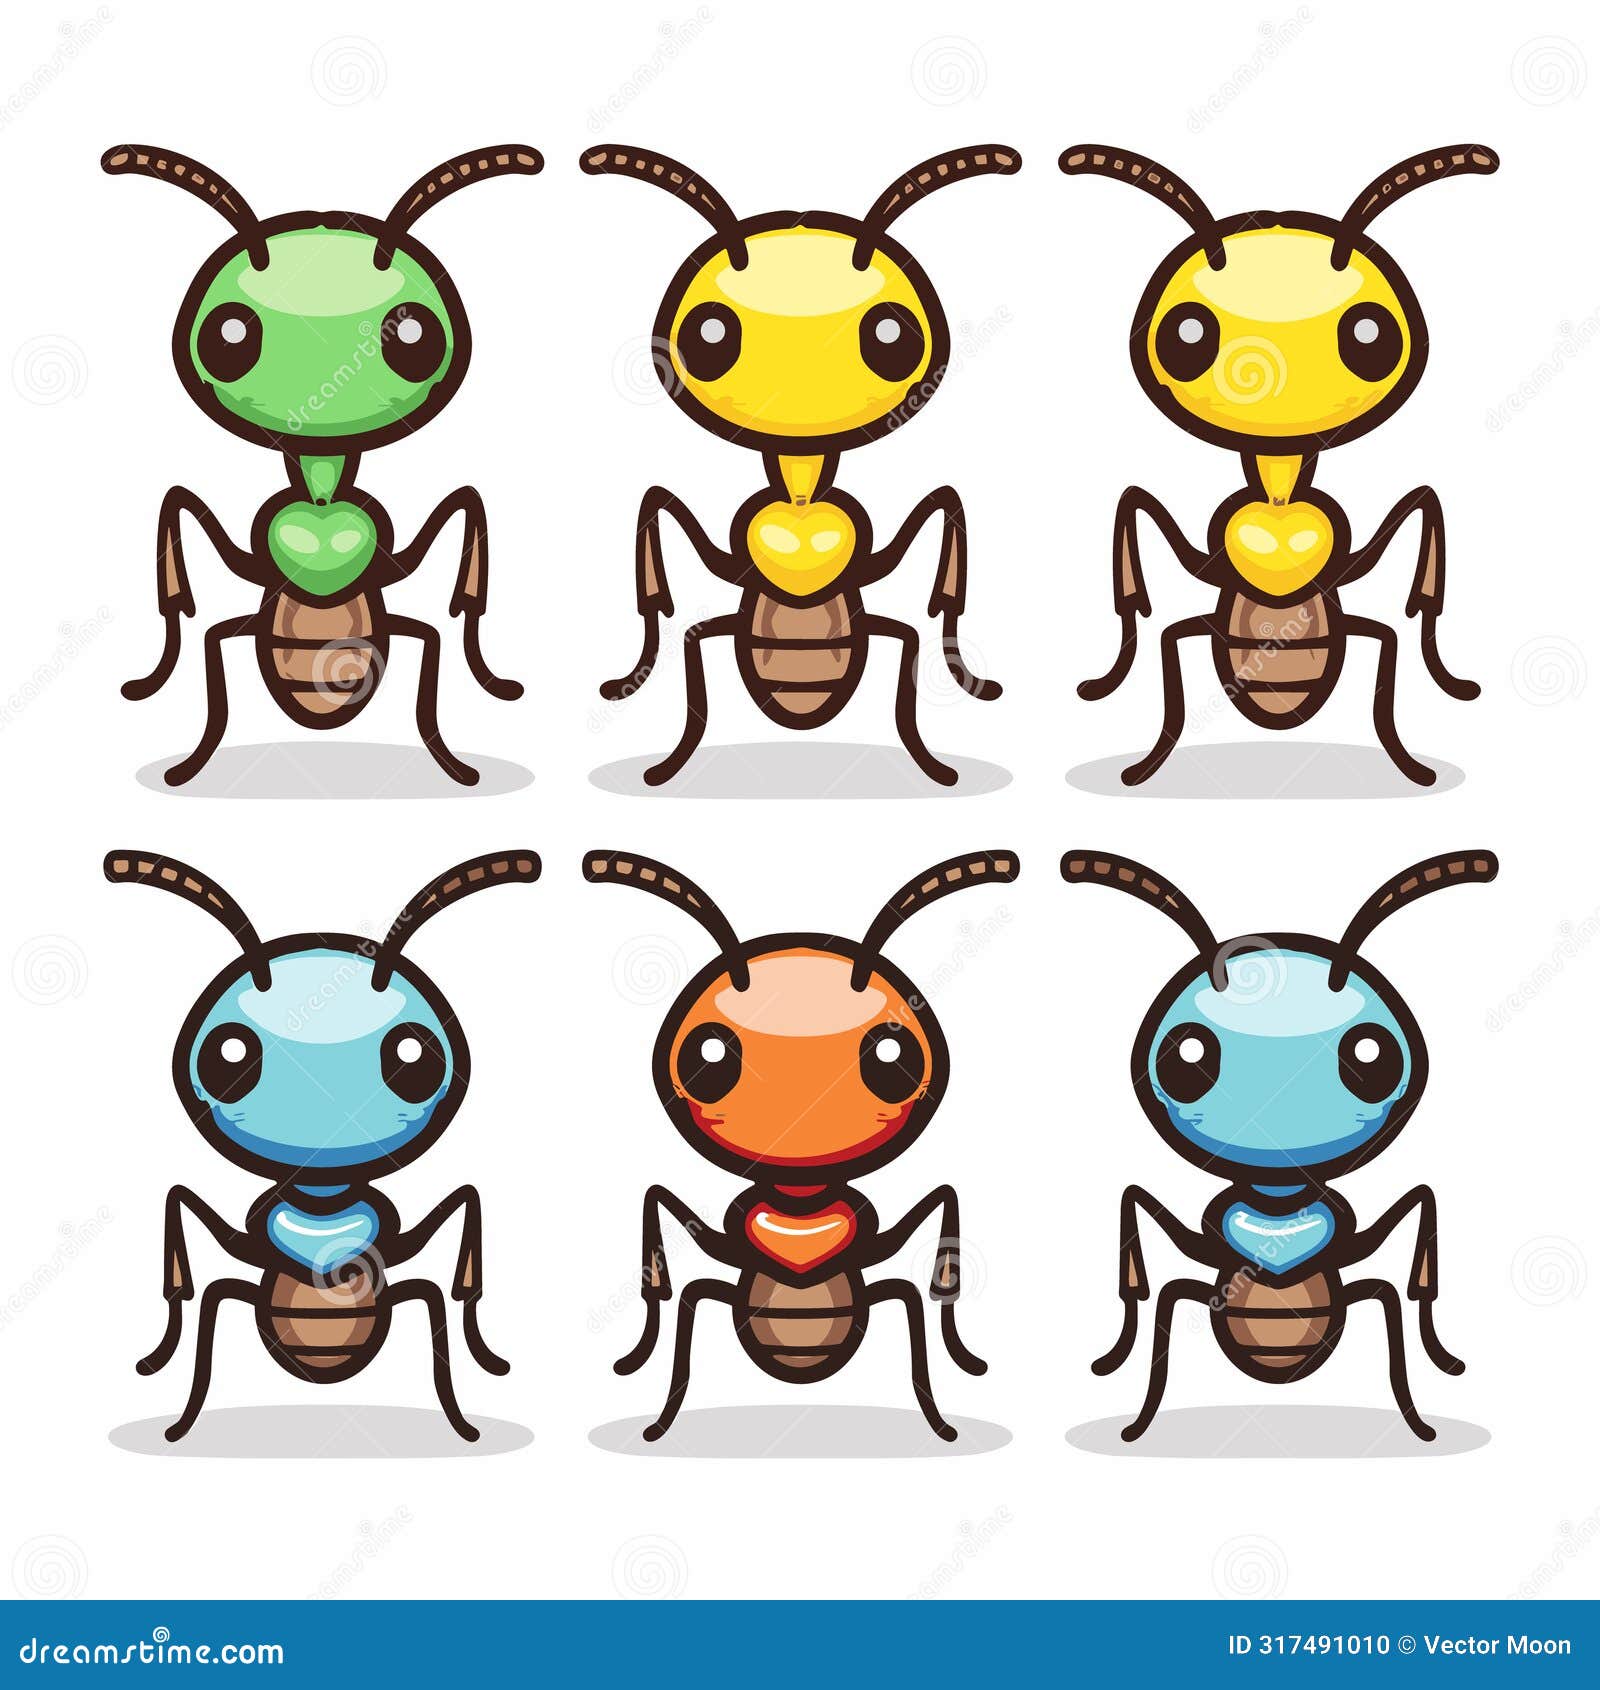 set six cartoon ants, unique coloration, anthropomorphic traits, friendly expressions. colorful